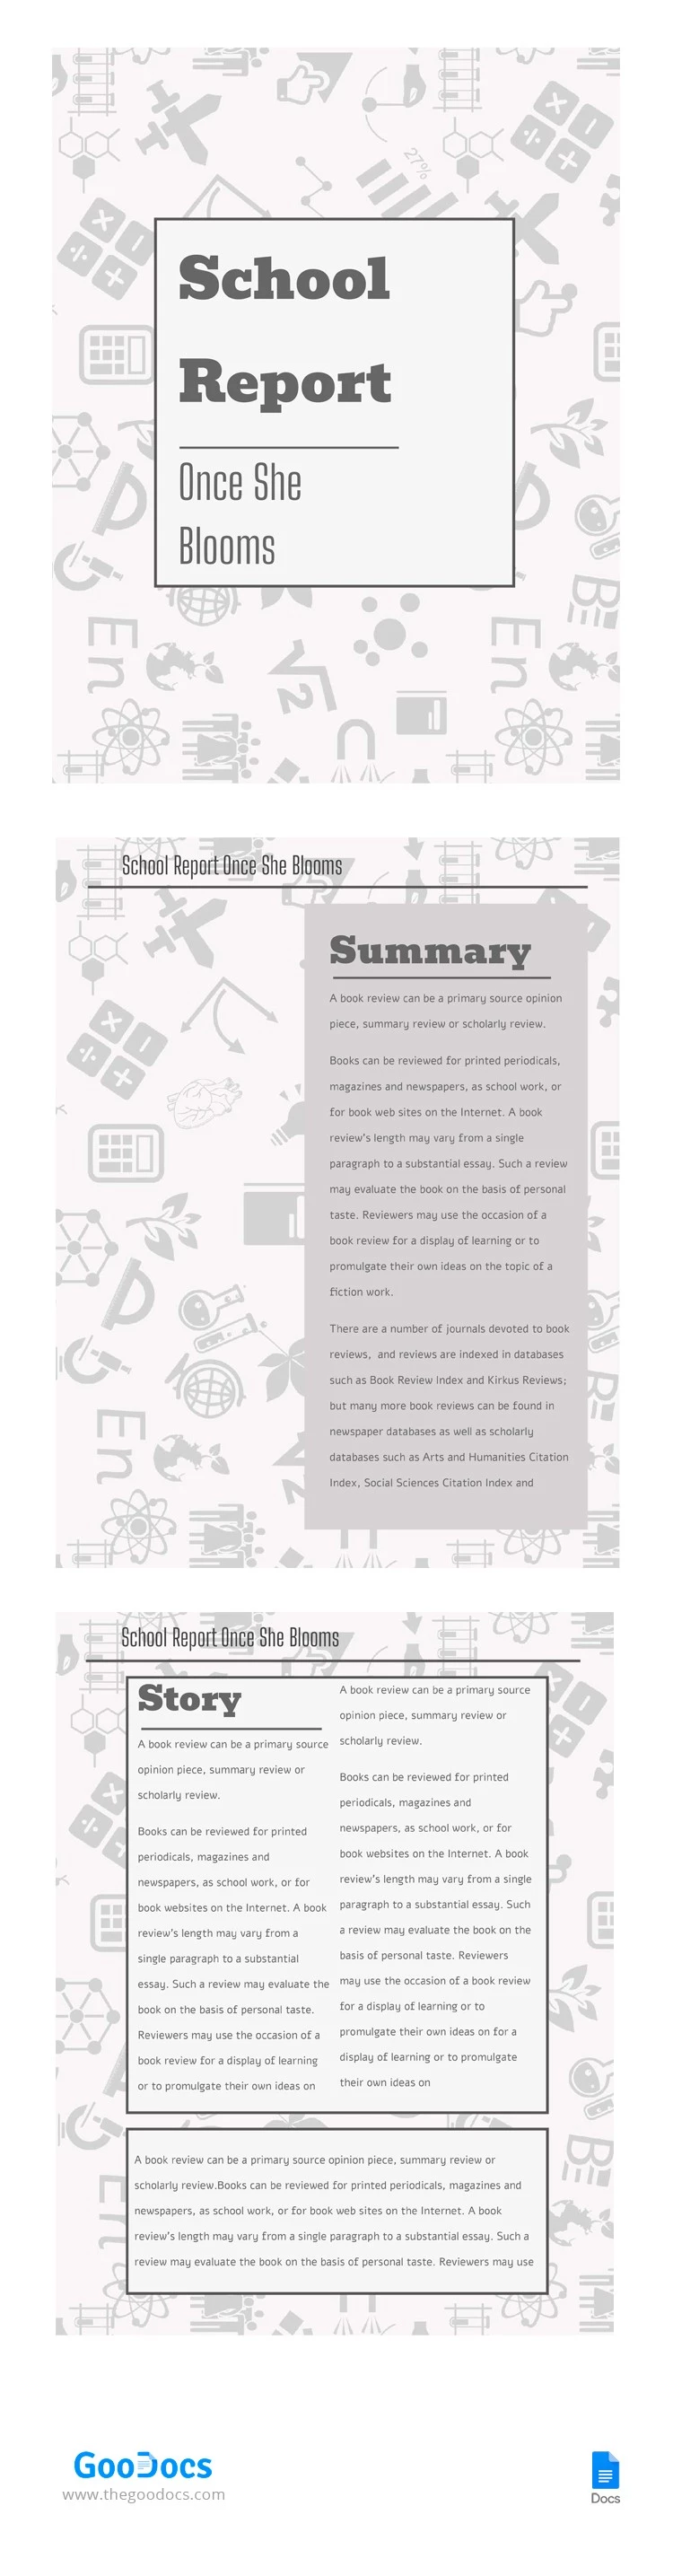 School Report - free Google Docs Template - 10064729